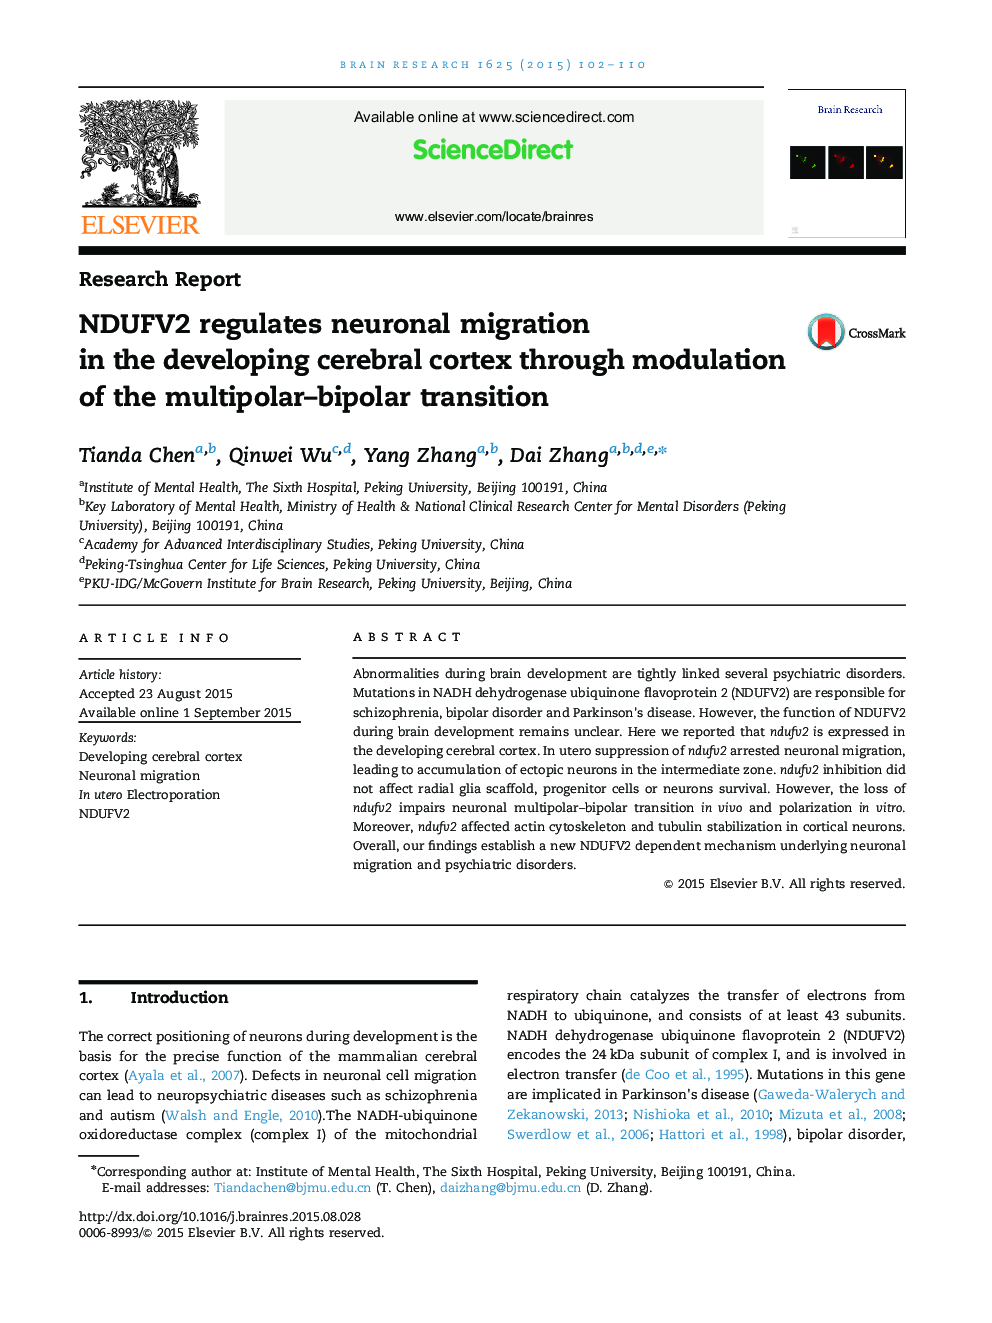 Research ReportNDUFV2 regulates neuronal migration in the developing cerebral cortex through modulation of the multipolar-bipolar transition